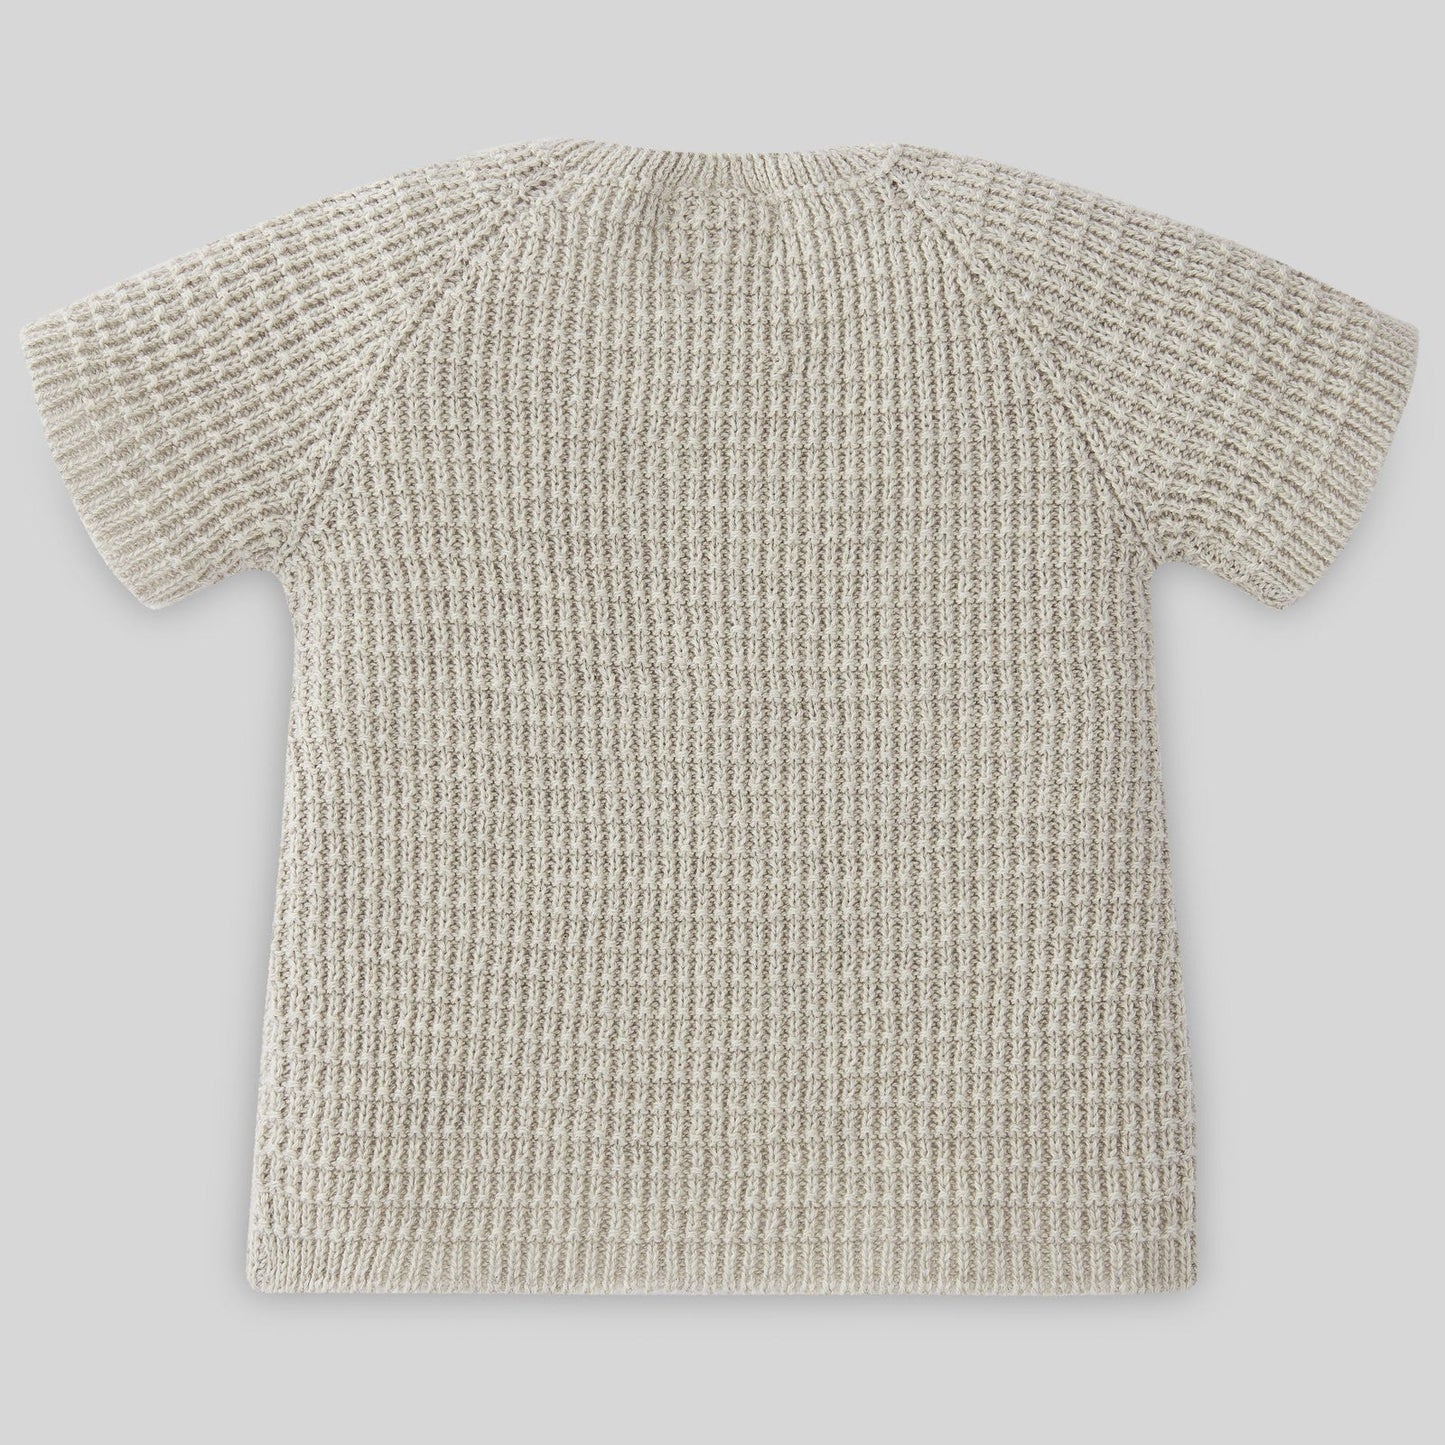 Paz Rodriguez 4-Piece Knitted (Sweater, Shorts, Hat, Blanket) Gift Set - Beige